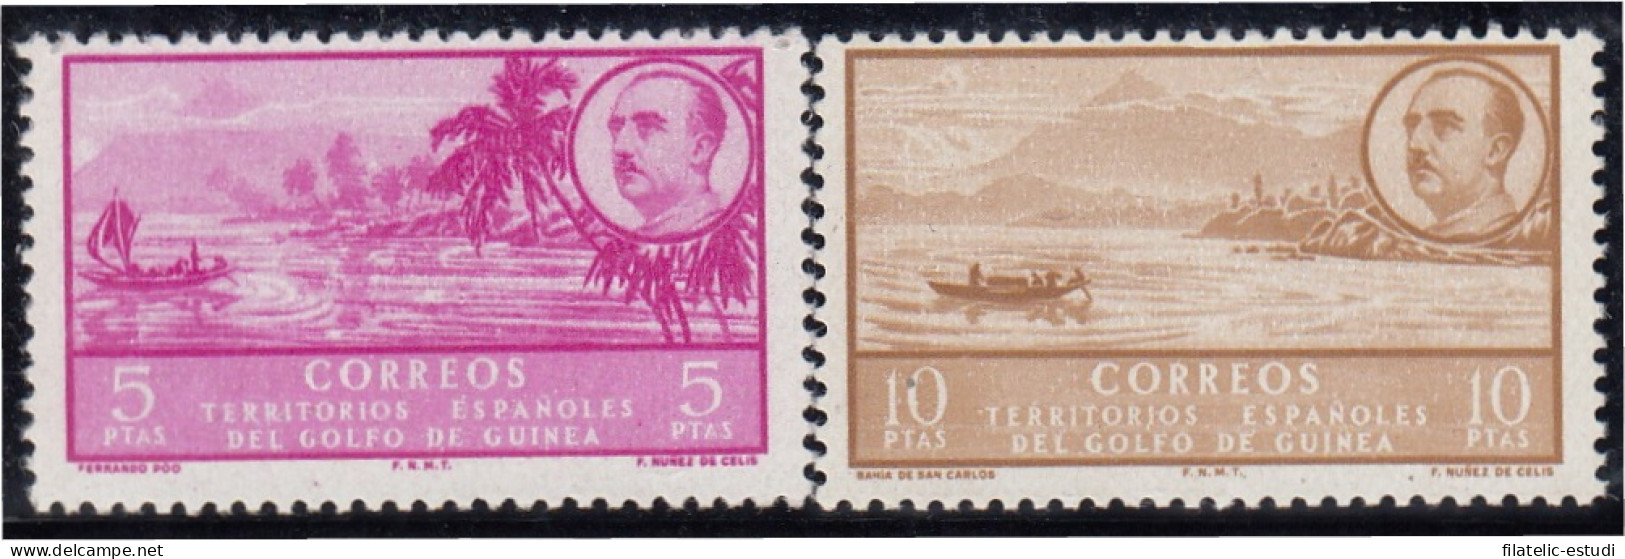 Guinea Española 291/92 1949/50 ( 277/93) Paisajes Franco MNH - Spanish Guinea